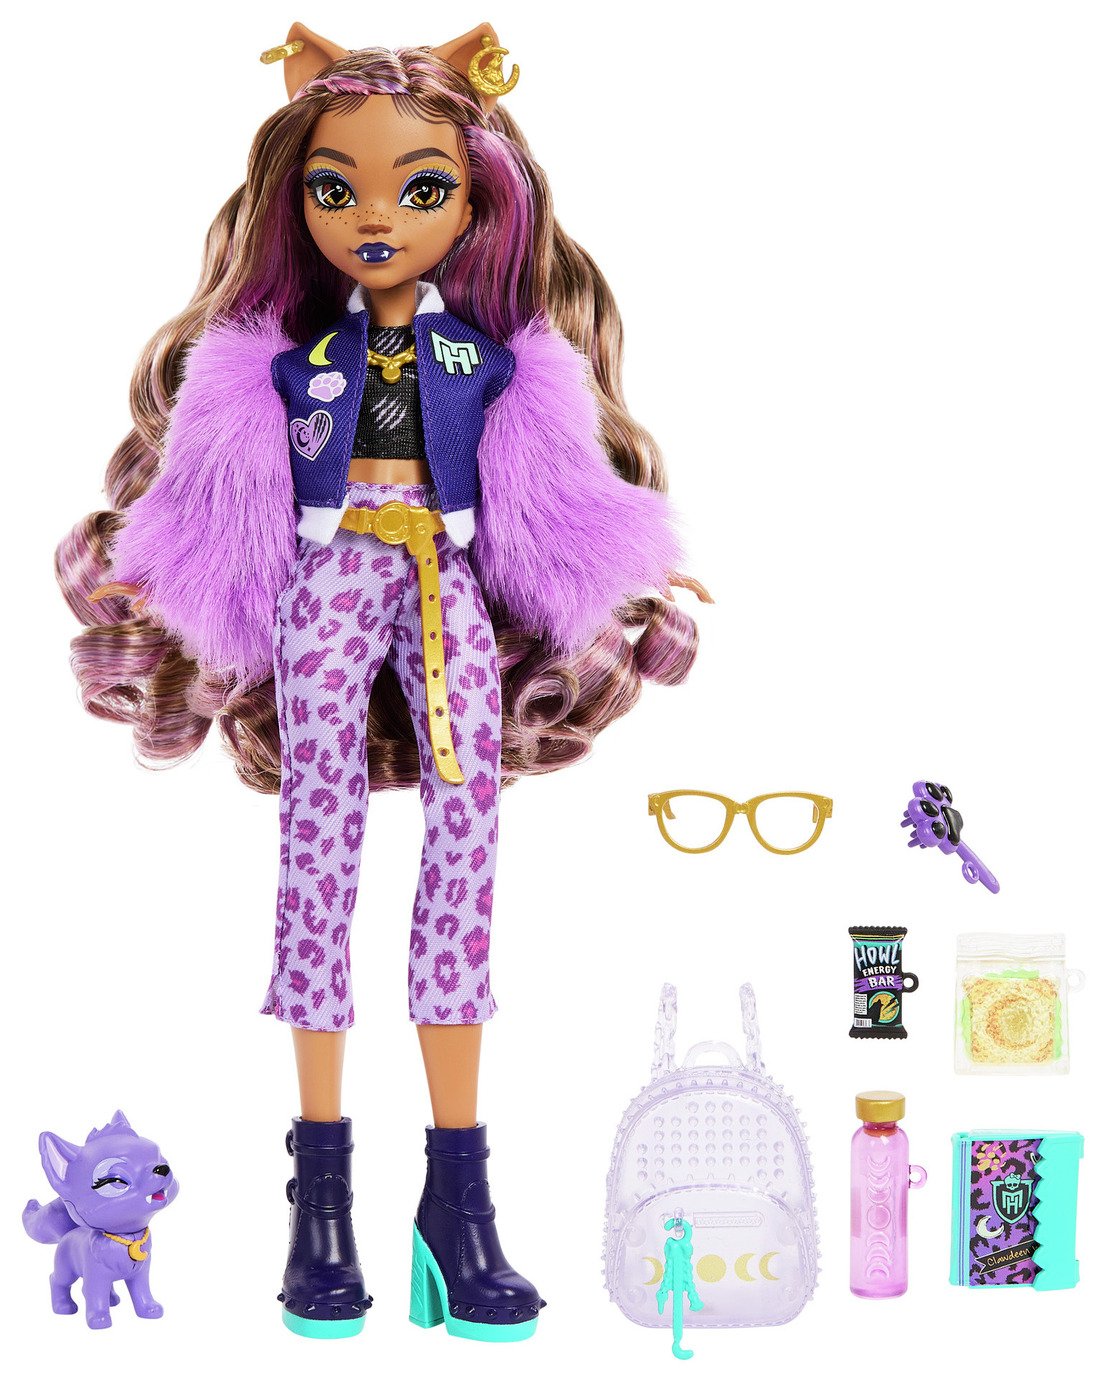 Monster High Clawdeen Wolf Fashion Doll & Accessories